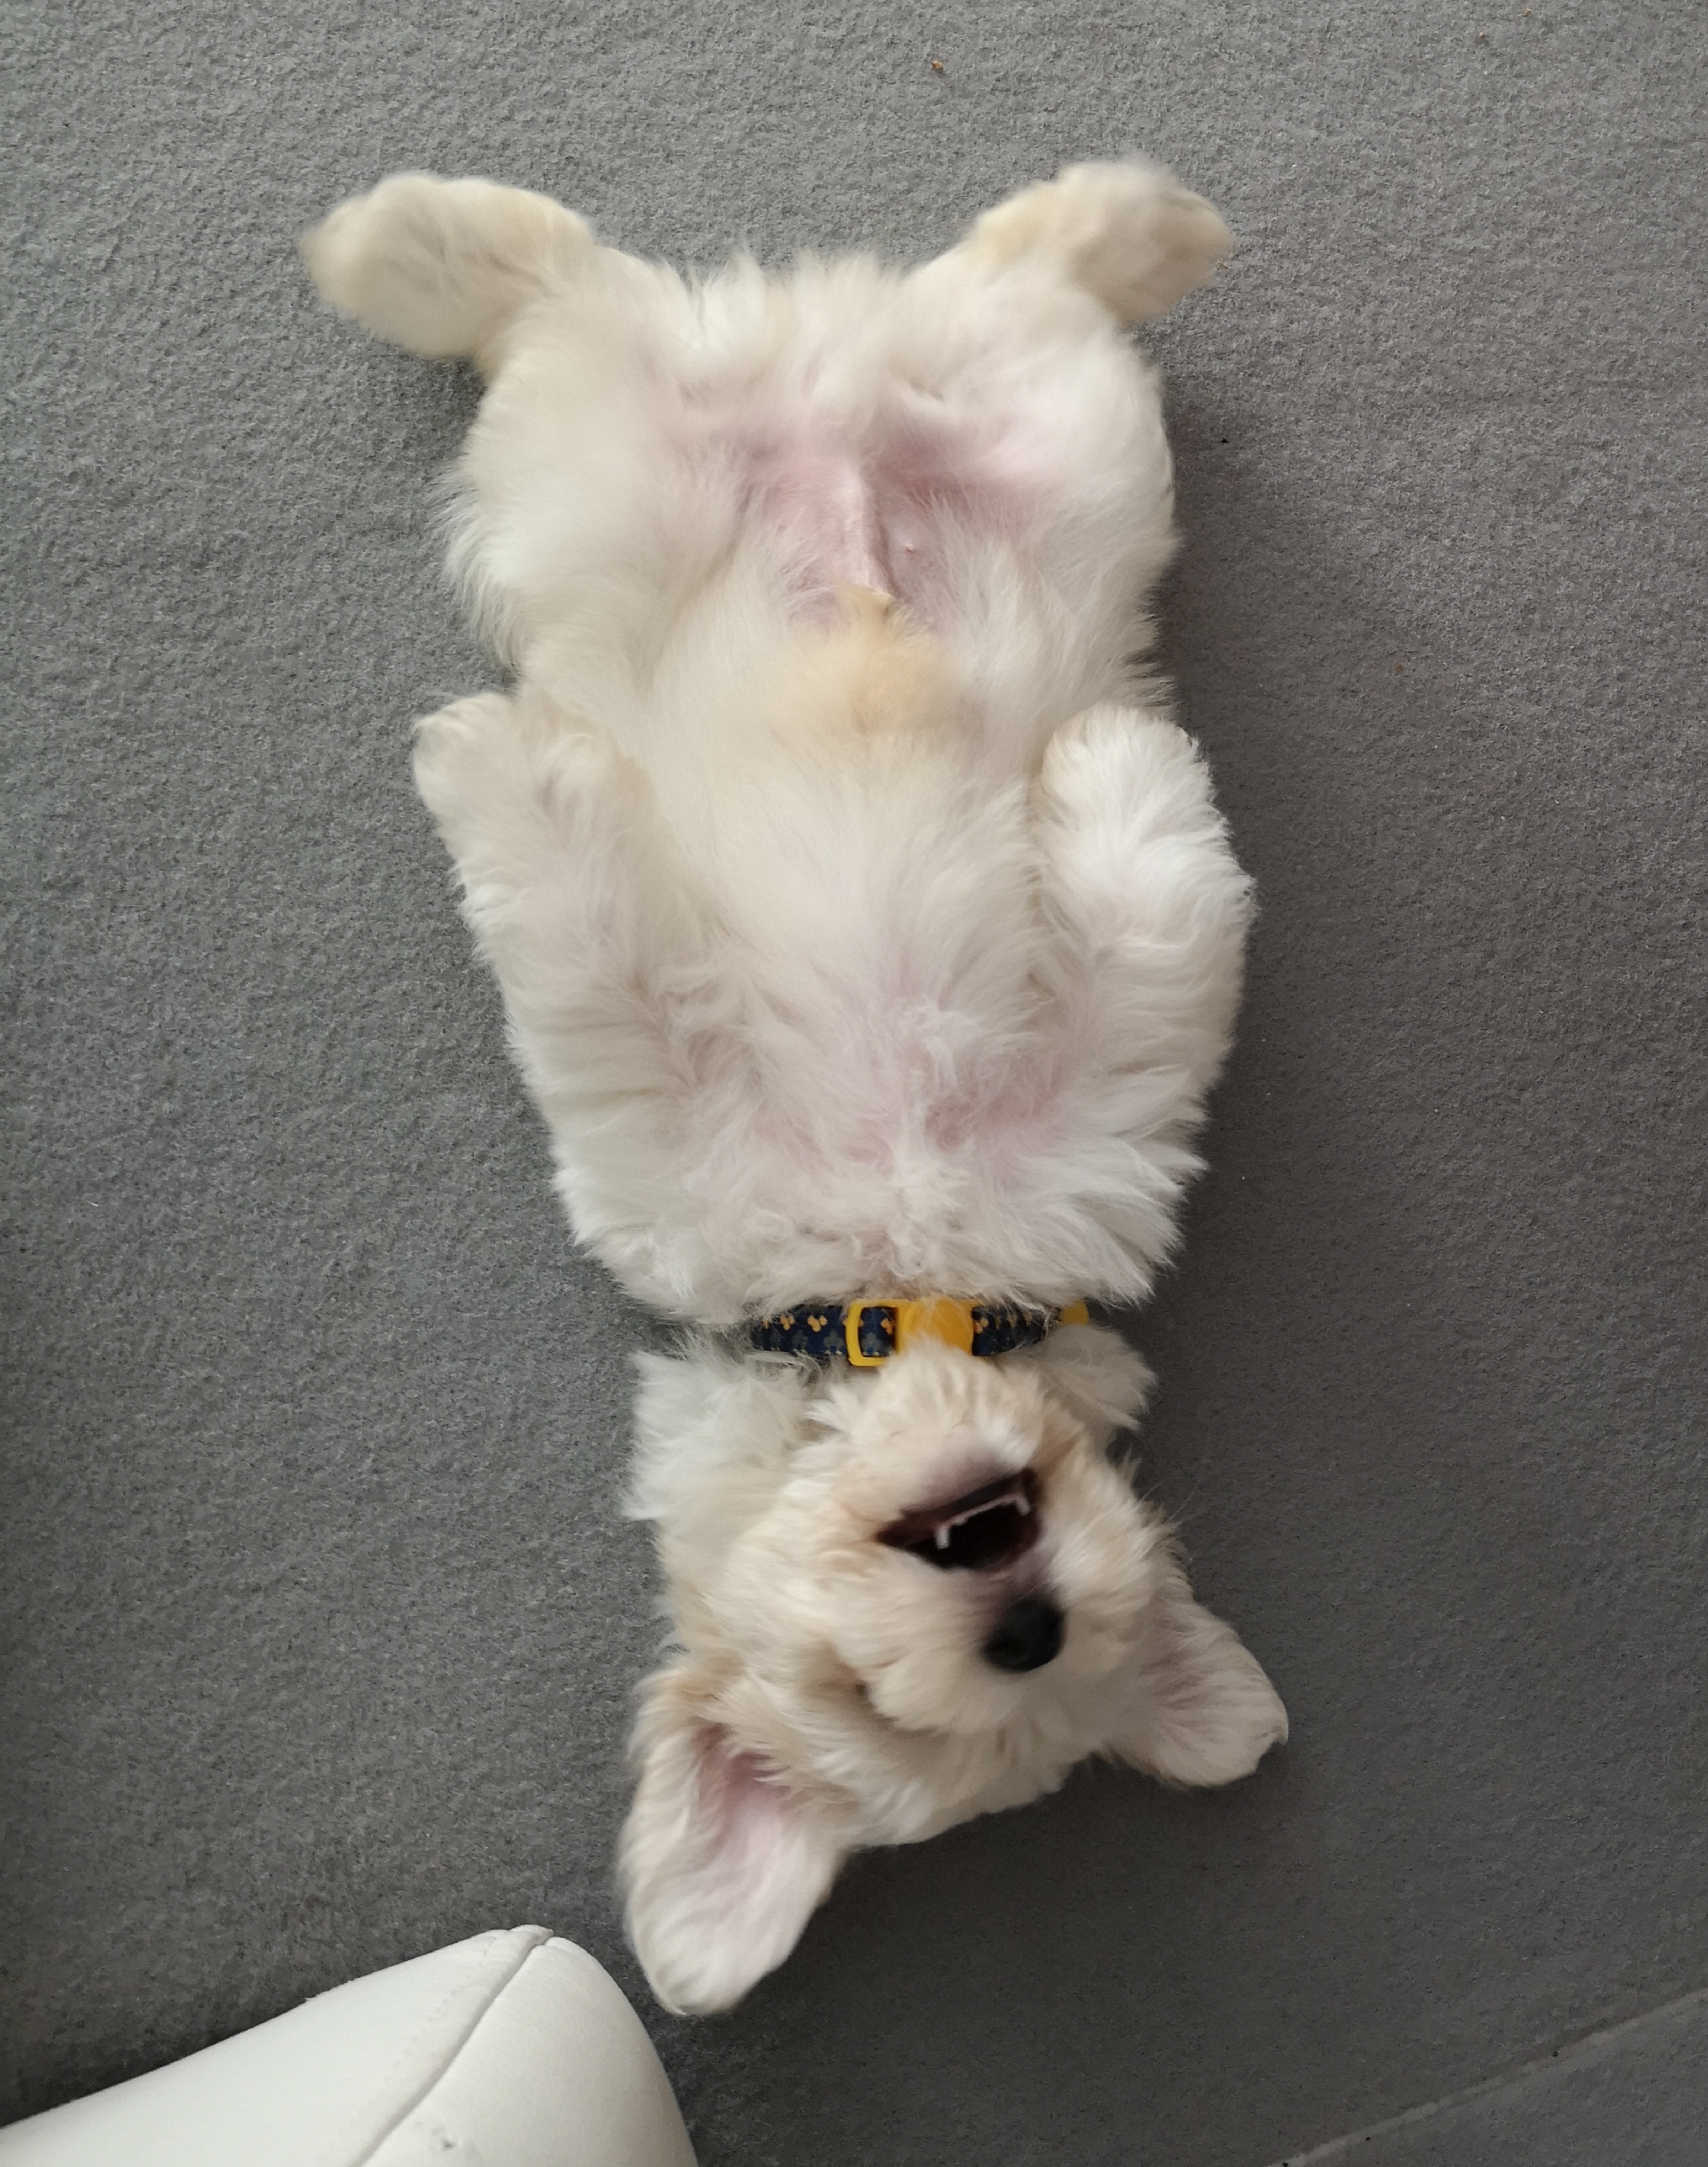 a dog lying on its back on carpet